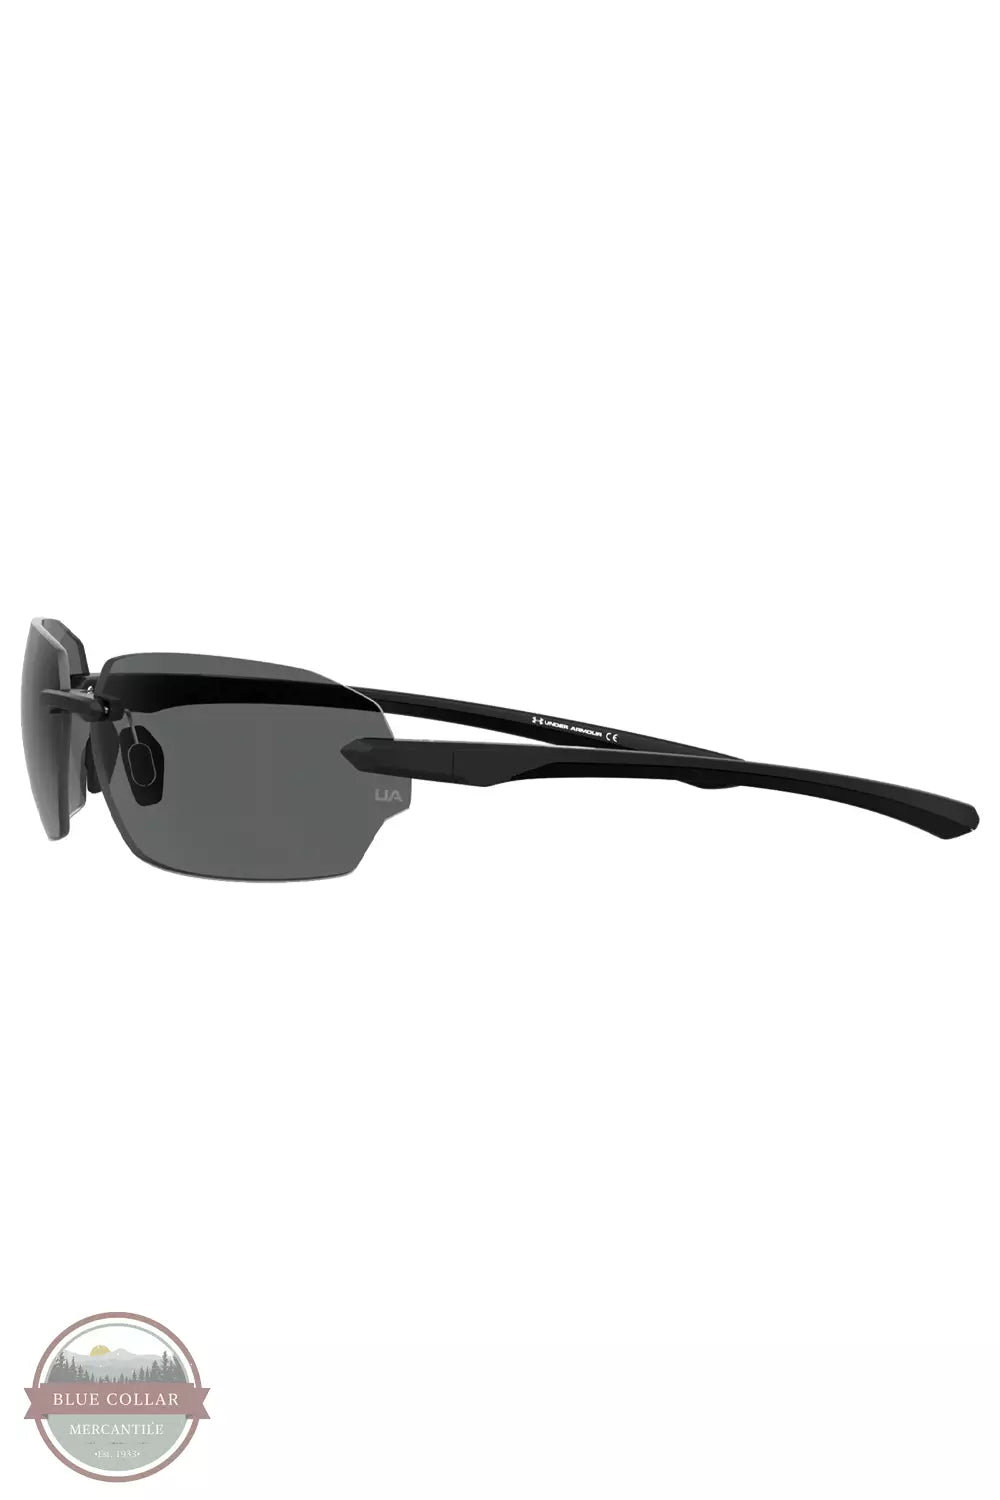 Under Armour 1378136-883 Fire 2 Sunglasses in Matte Black / Ruthenium Side View